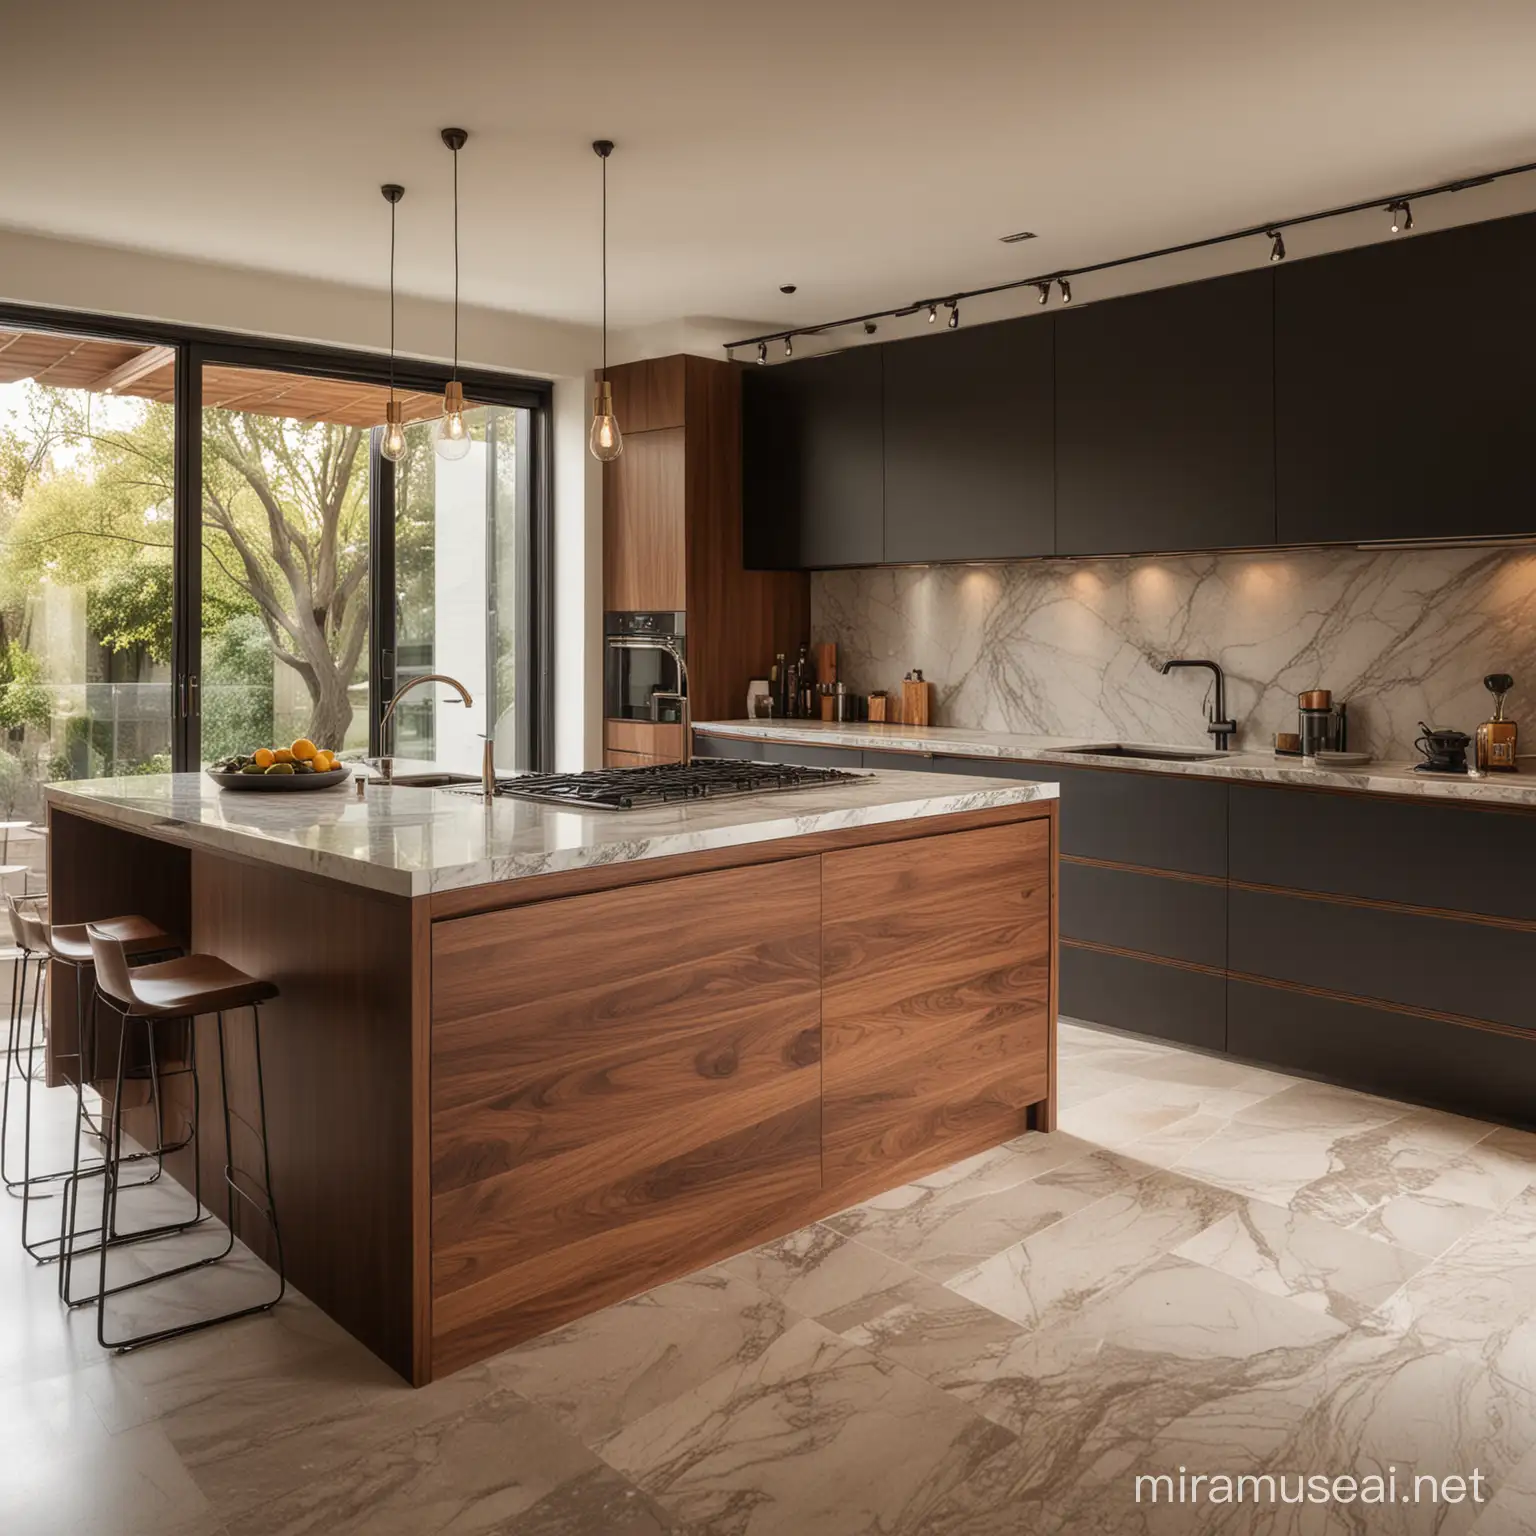 Modern Walnut Kitchen with Black and Brown Marble Accents under Warm Lighting